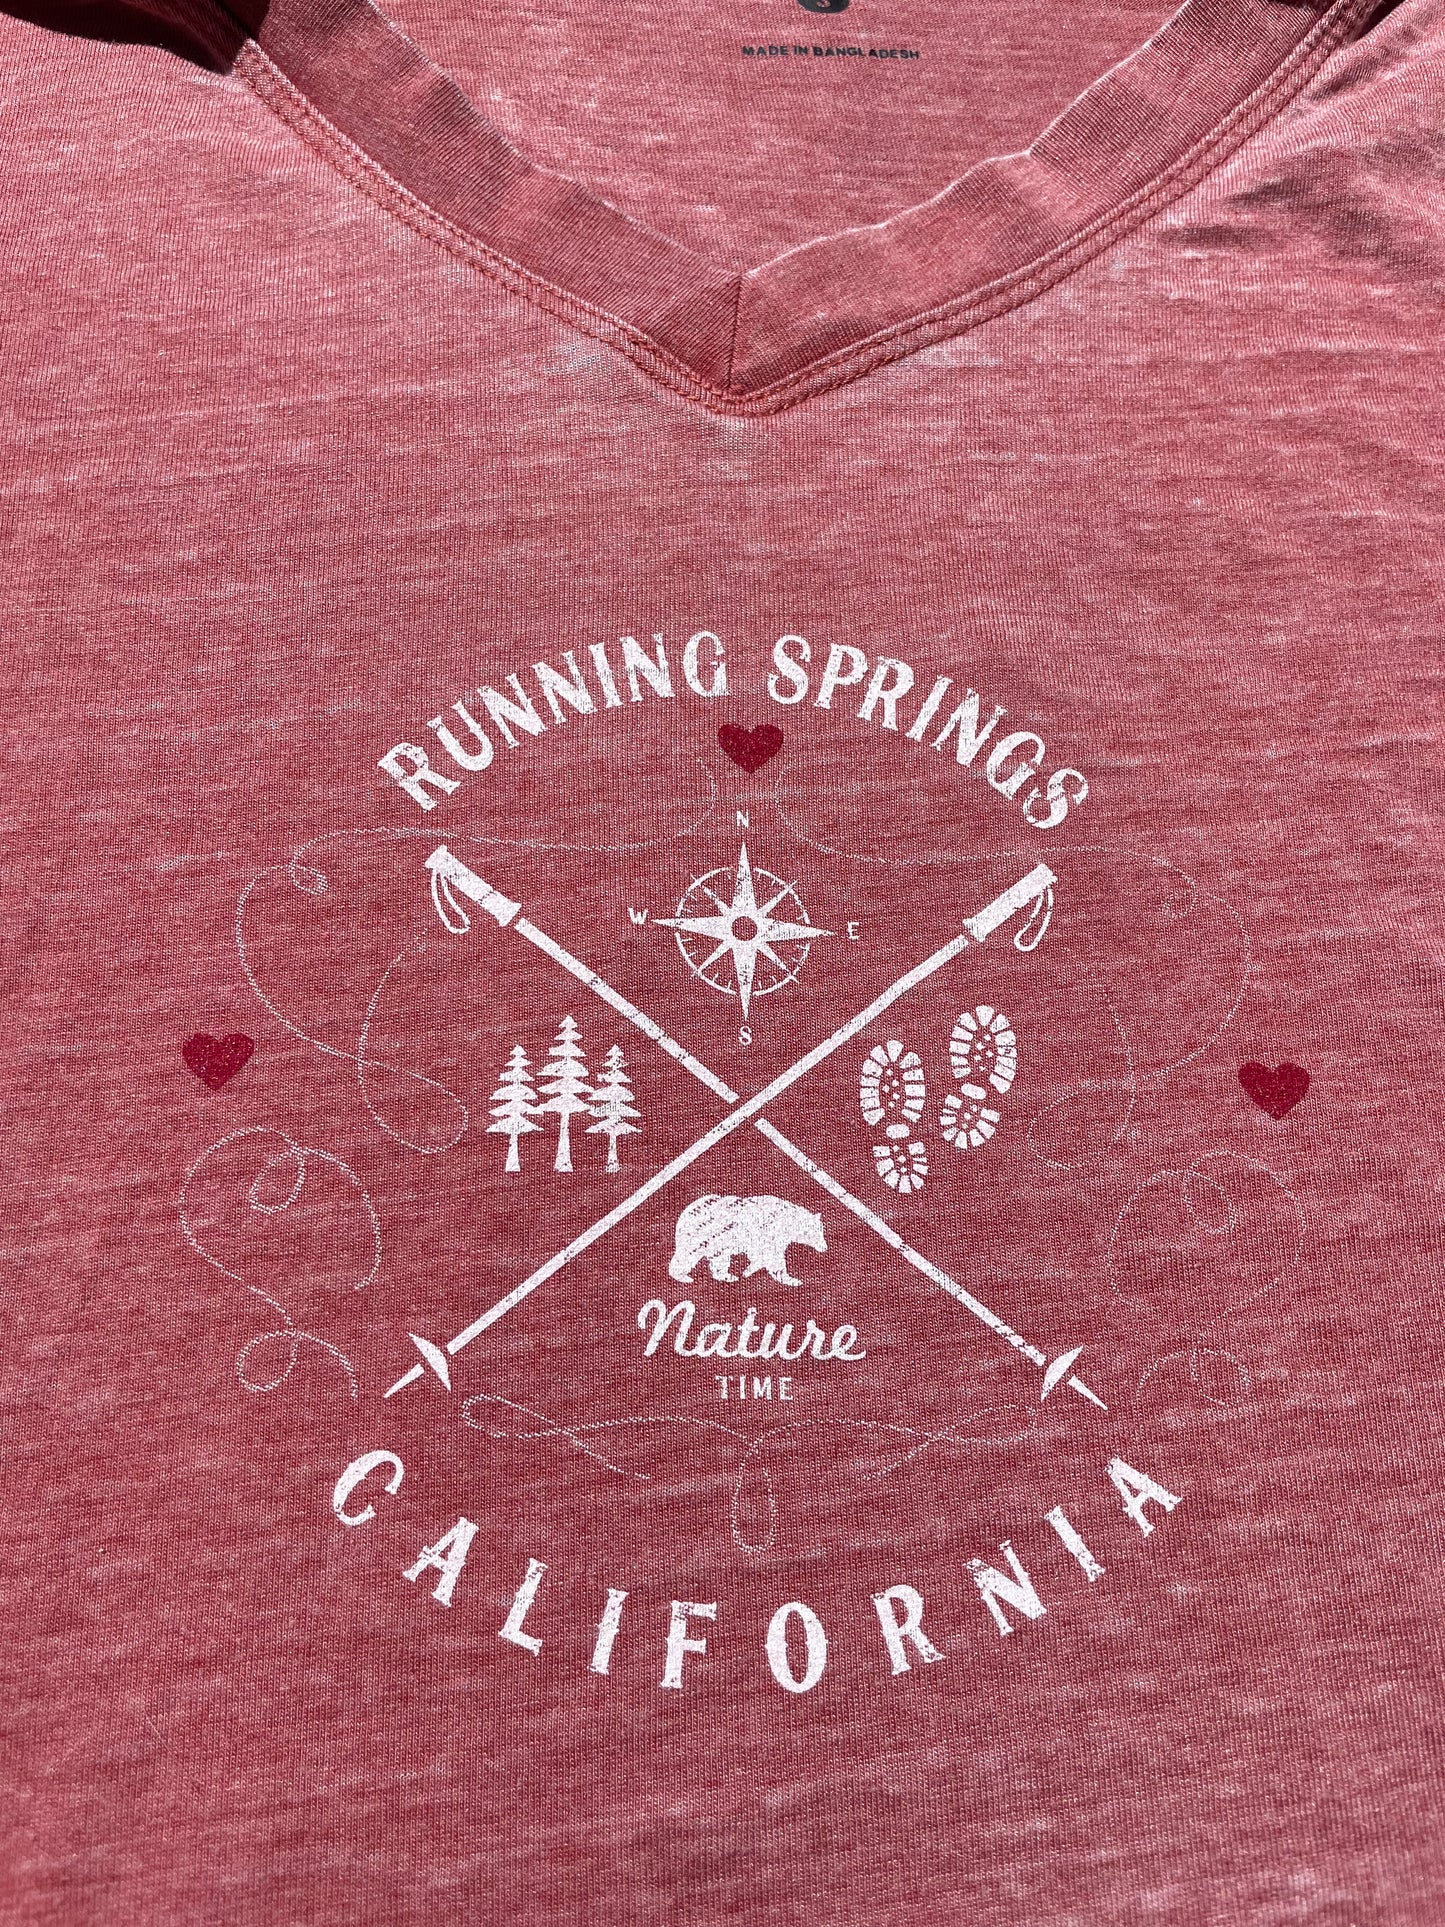 Running Springs Shirt